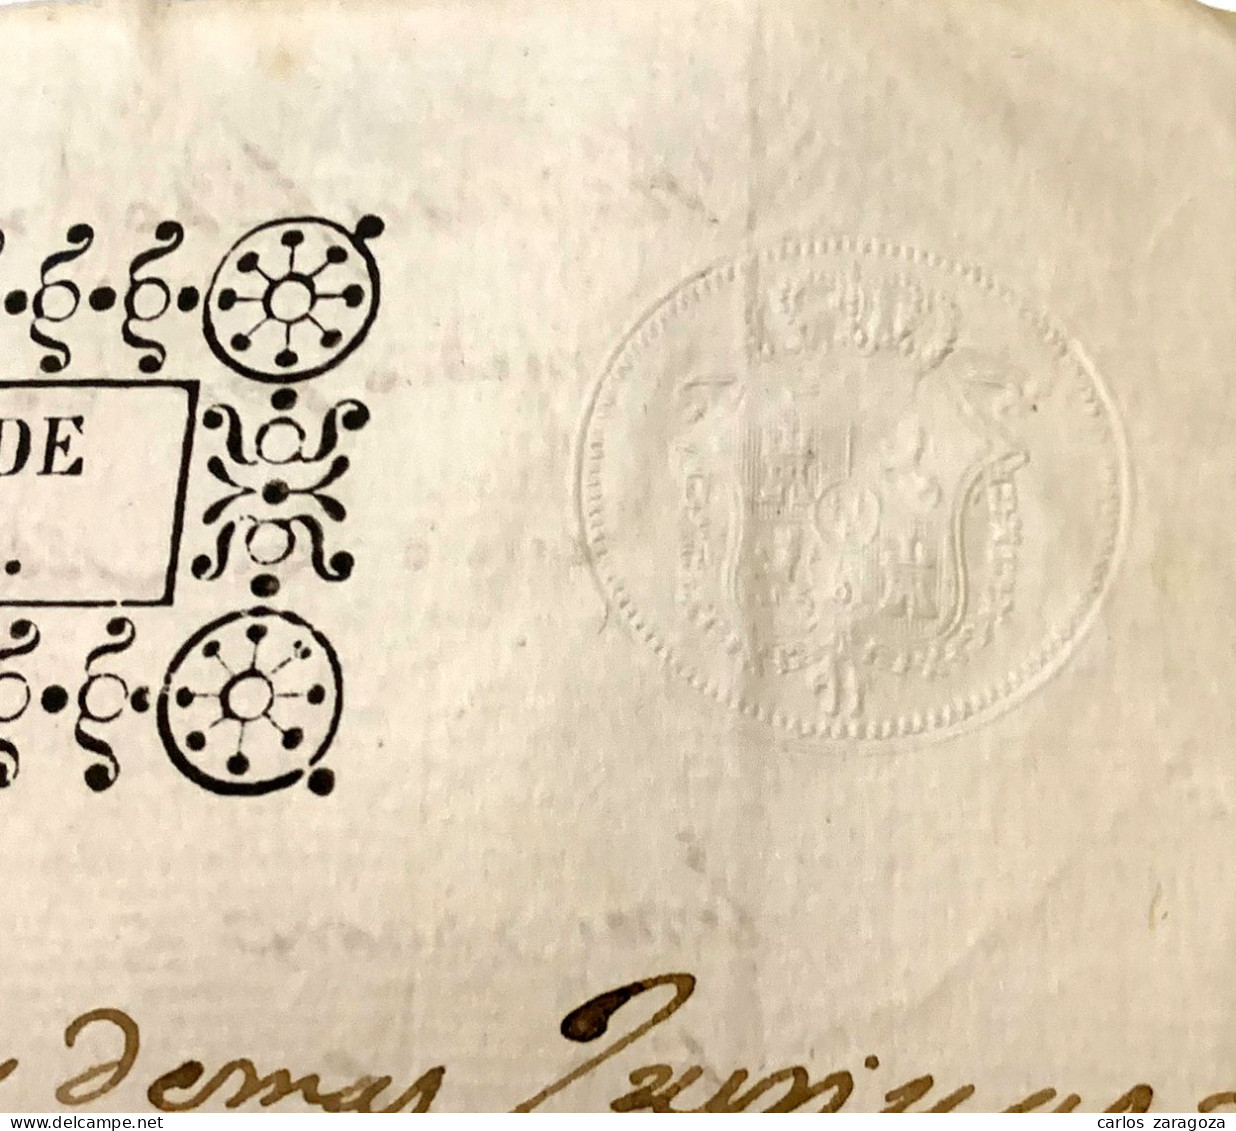 ESPAÑA 1840 — TIMBRE FISCAL, SELLOS DE 40 Ms — Pliego Completo, 4 Páginas — TIMBROLOGIA - Fiscale Zegels